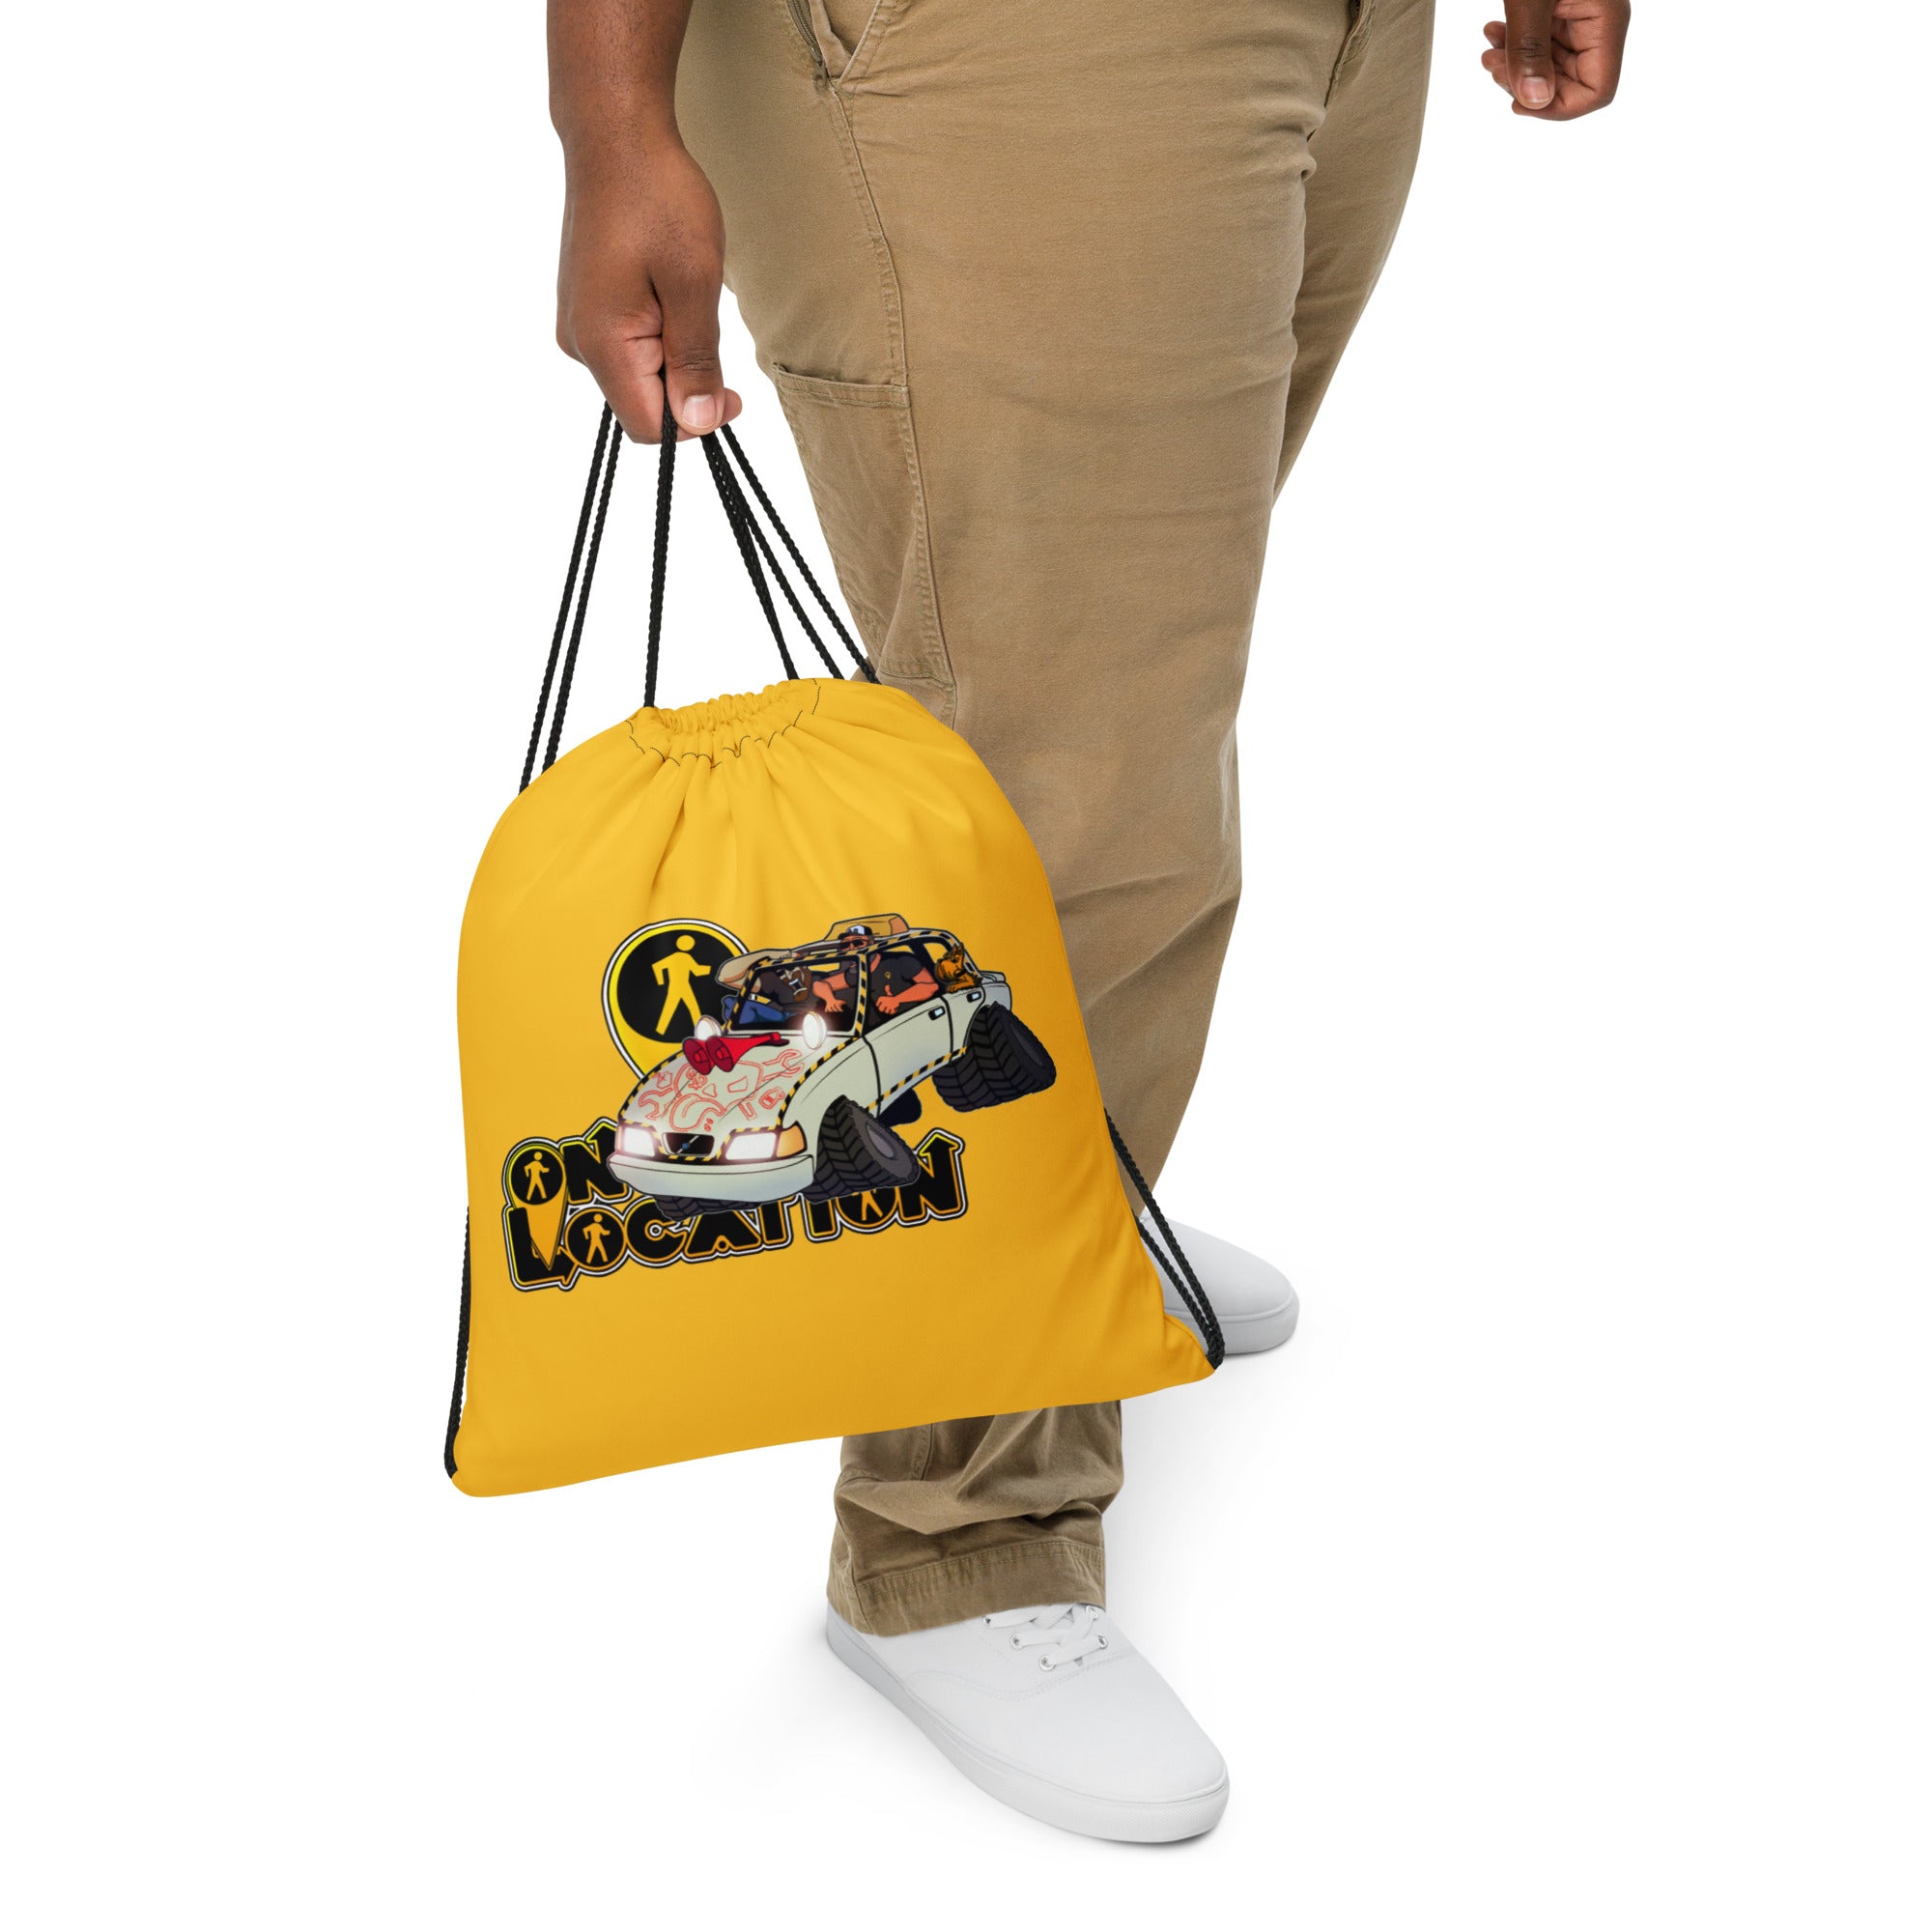 Navigation Driving Challenge Drawstring Bag (safety yellow)